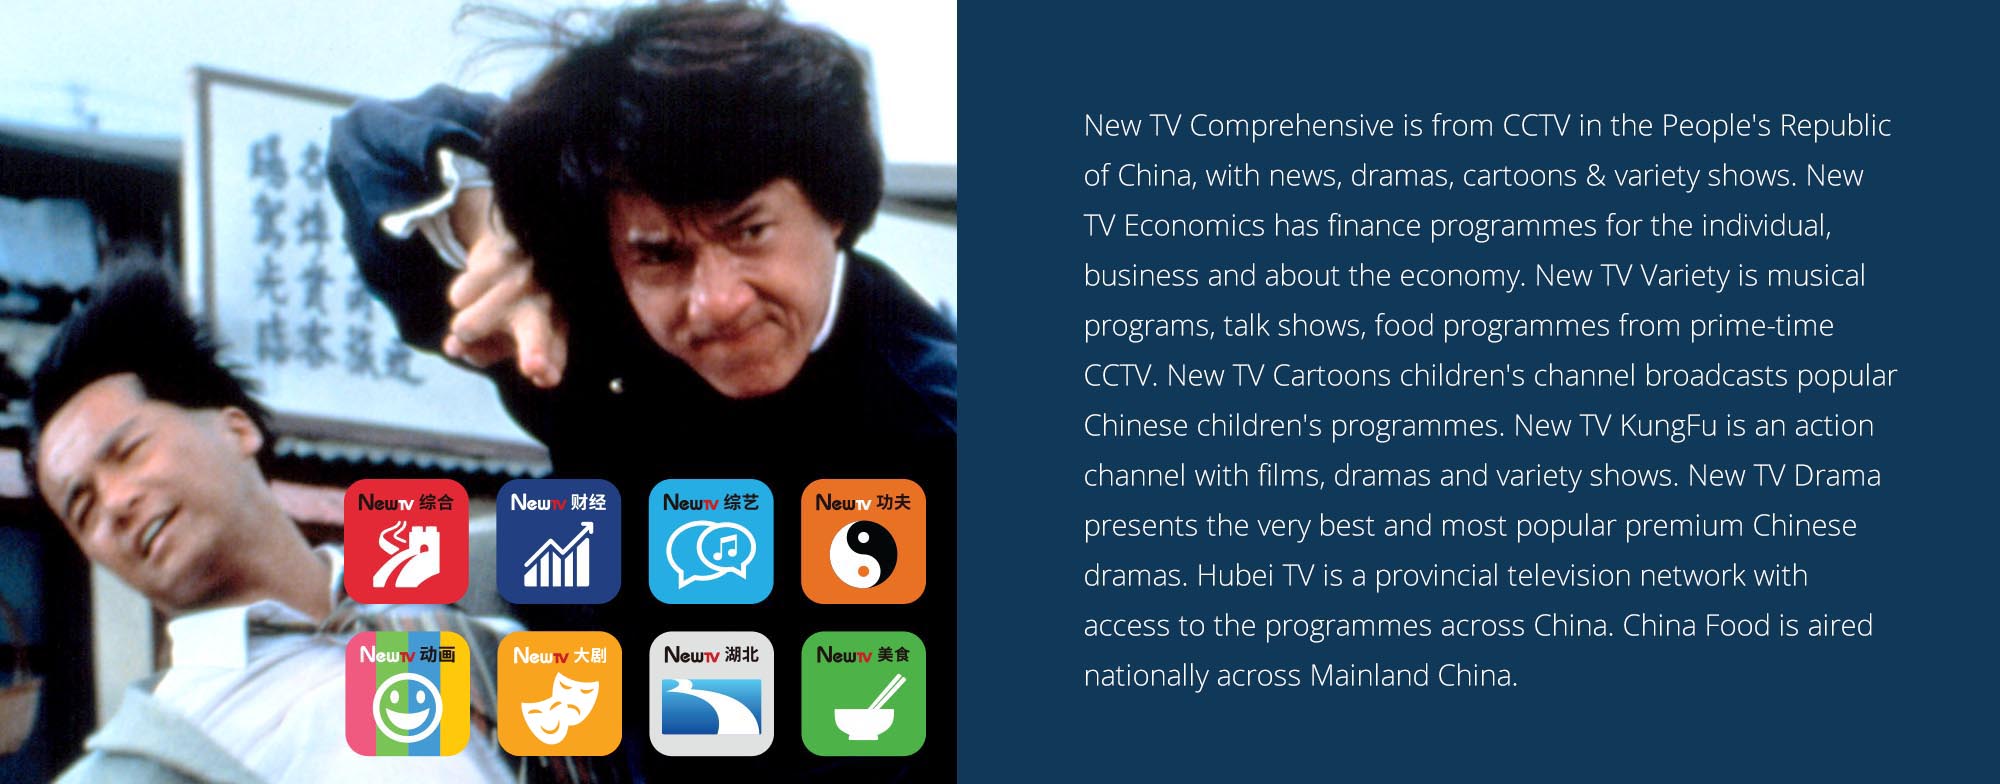 CCTV New TV - Techlive International Channel